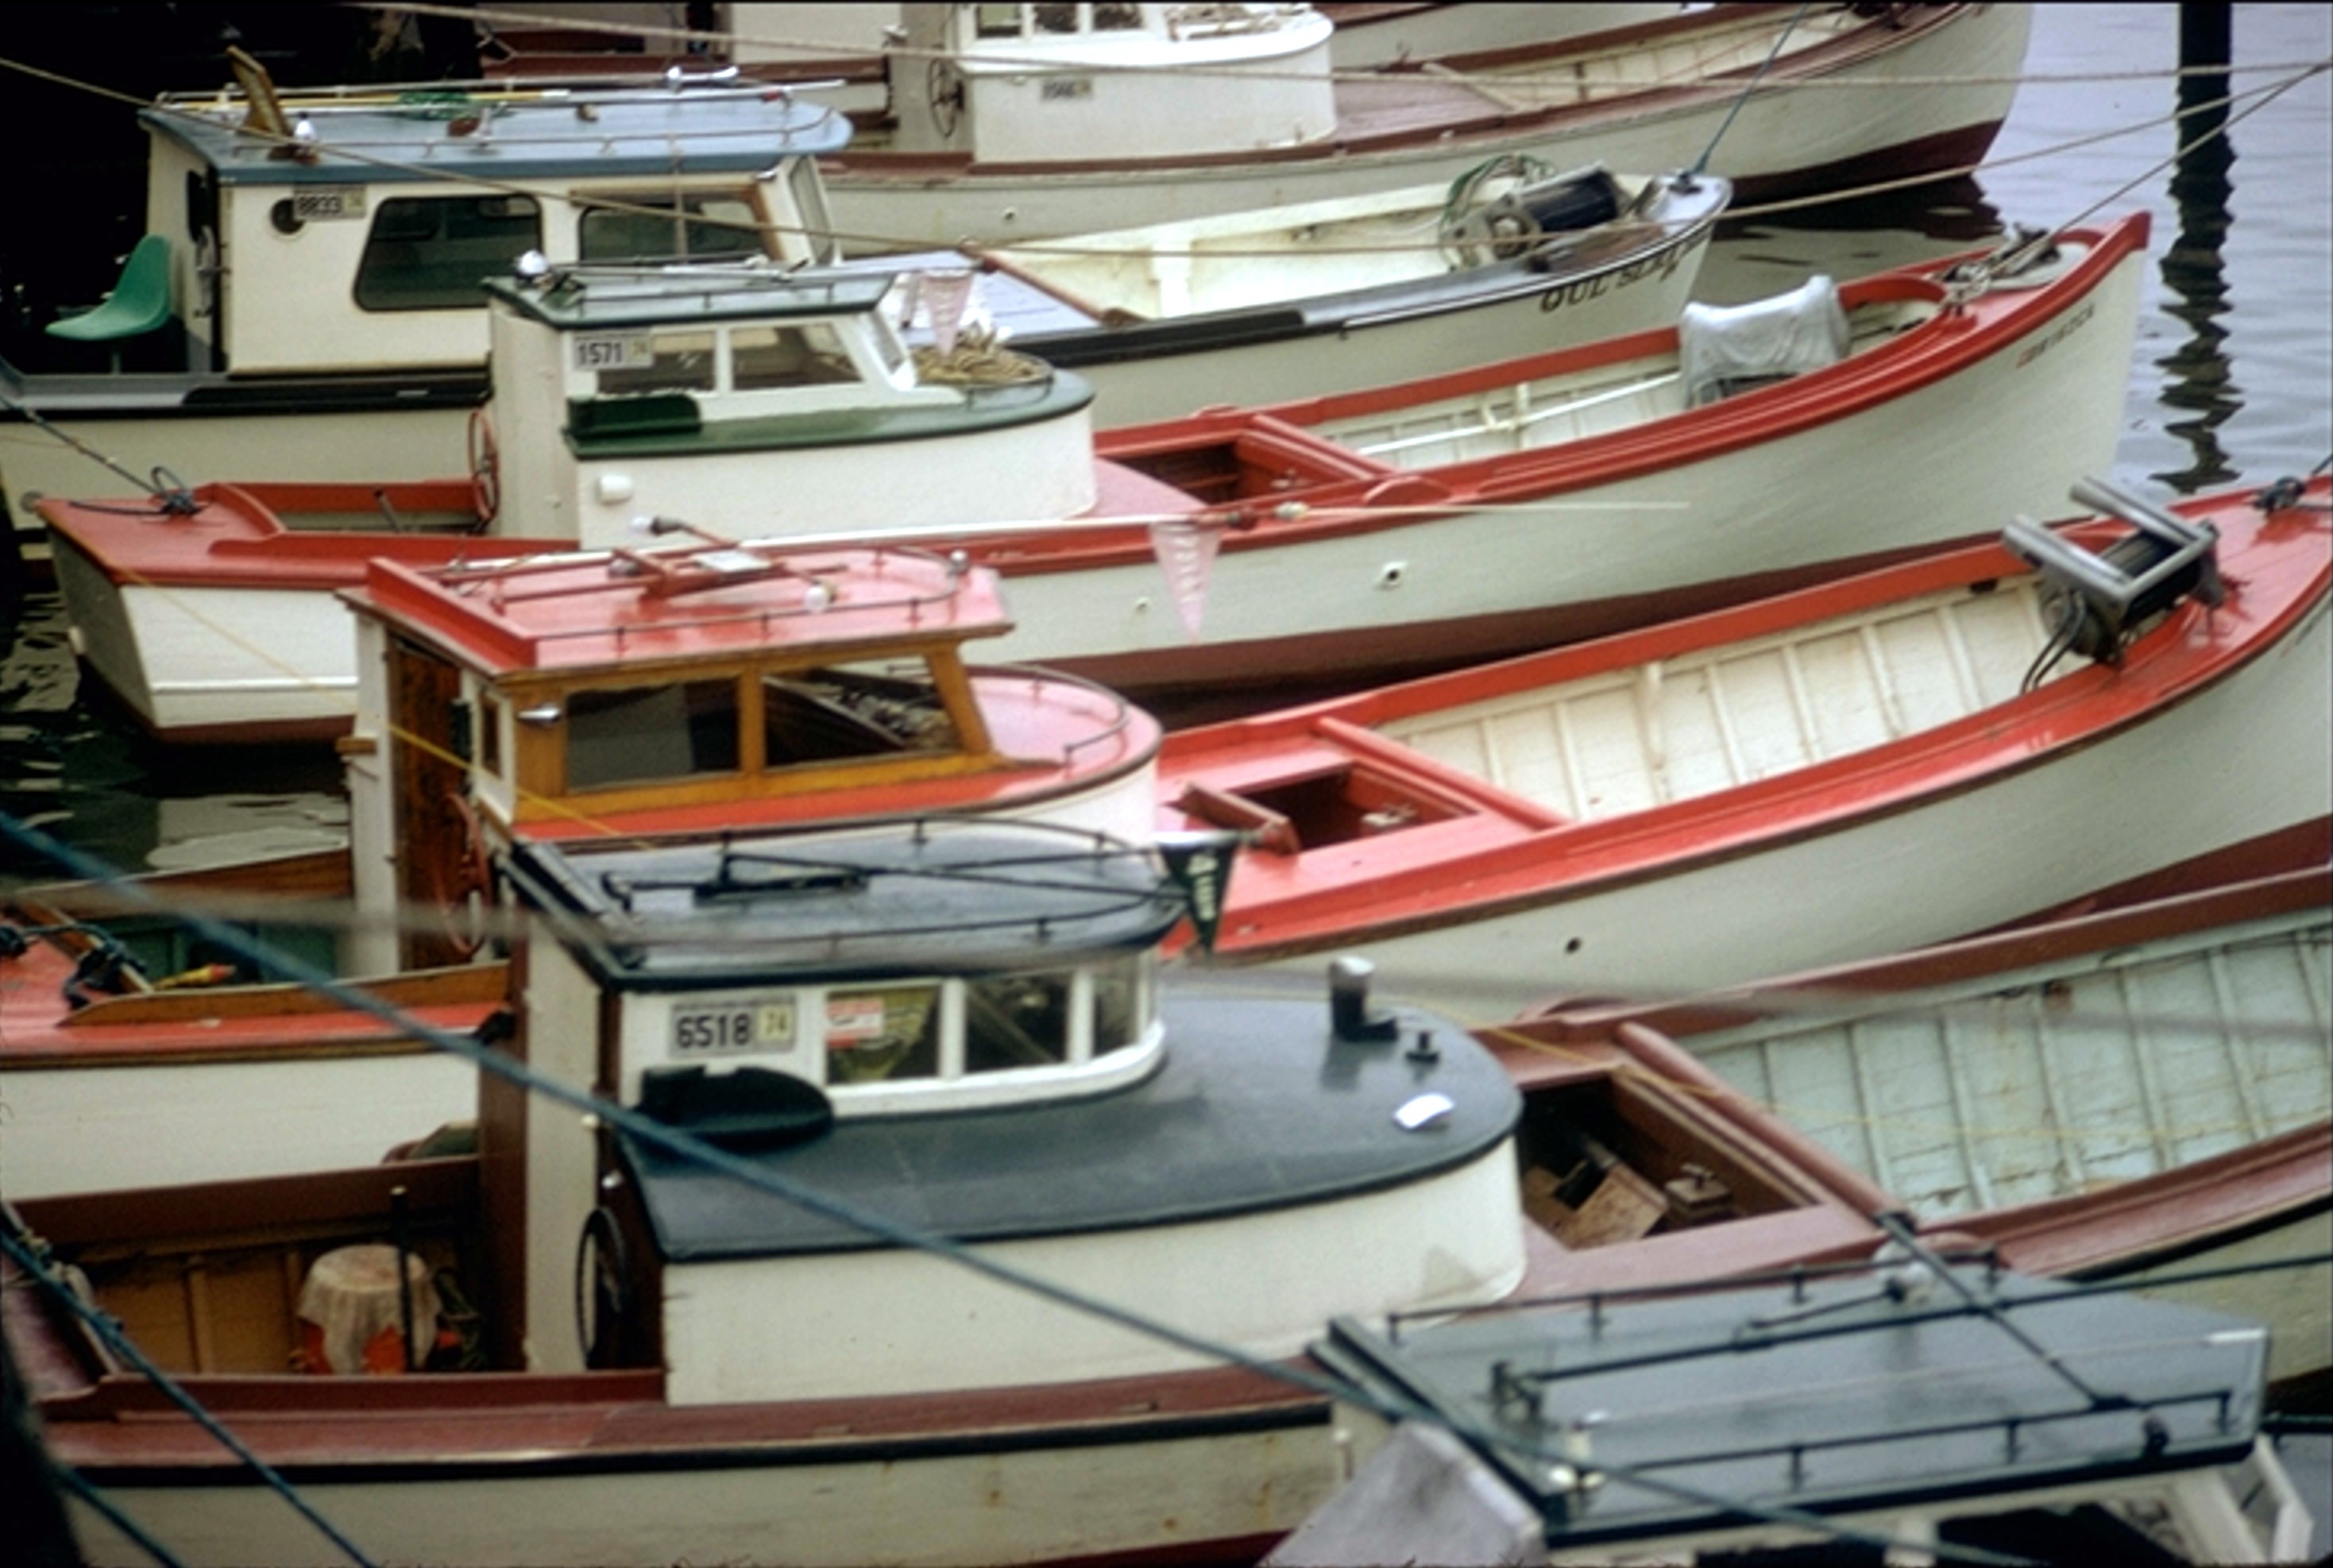 gillnet boats in Astoria 1974